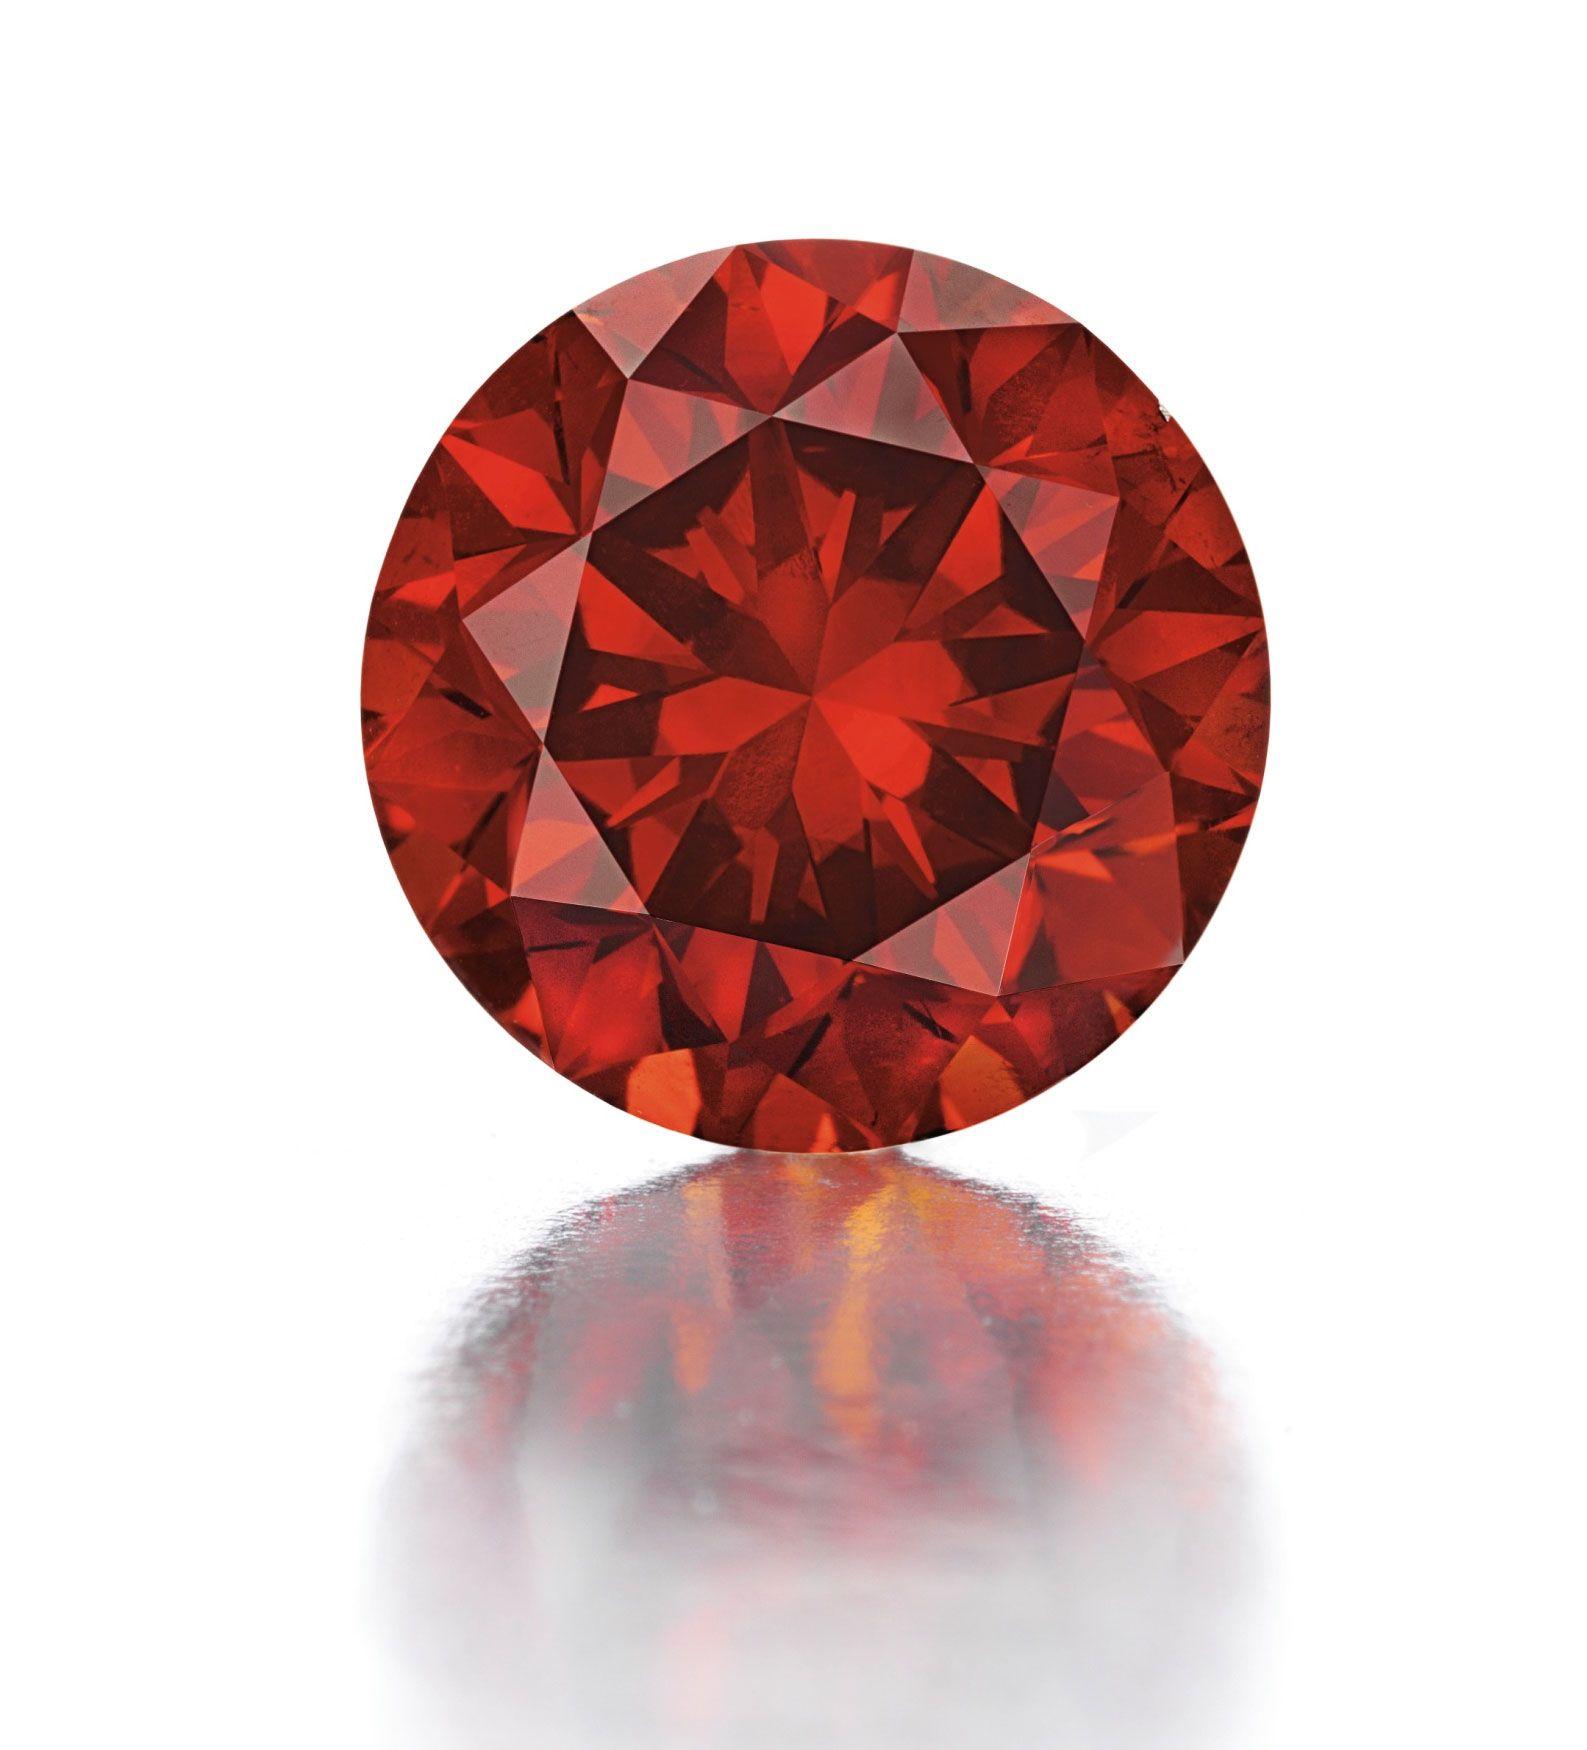 3 Red Diamond Logo - Rare 3 Carat Red Diamond Highlights Upcoming Christie's Auction - JCK